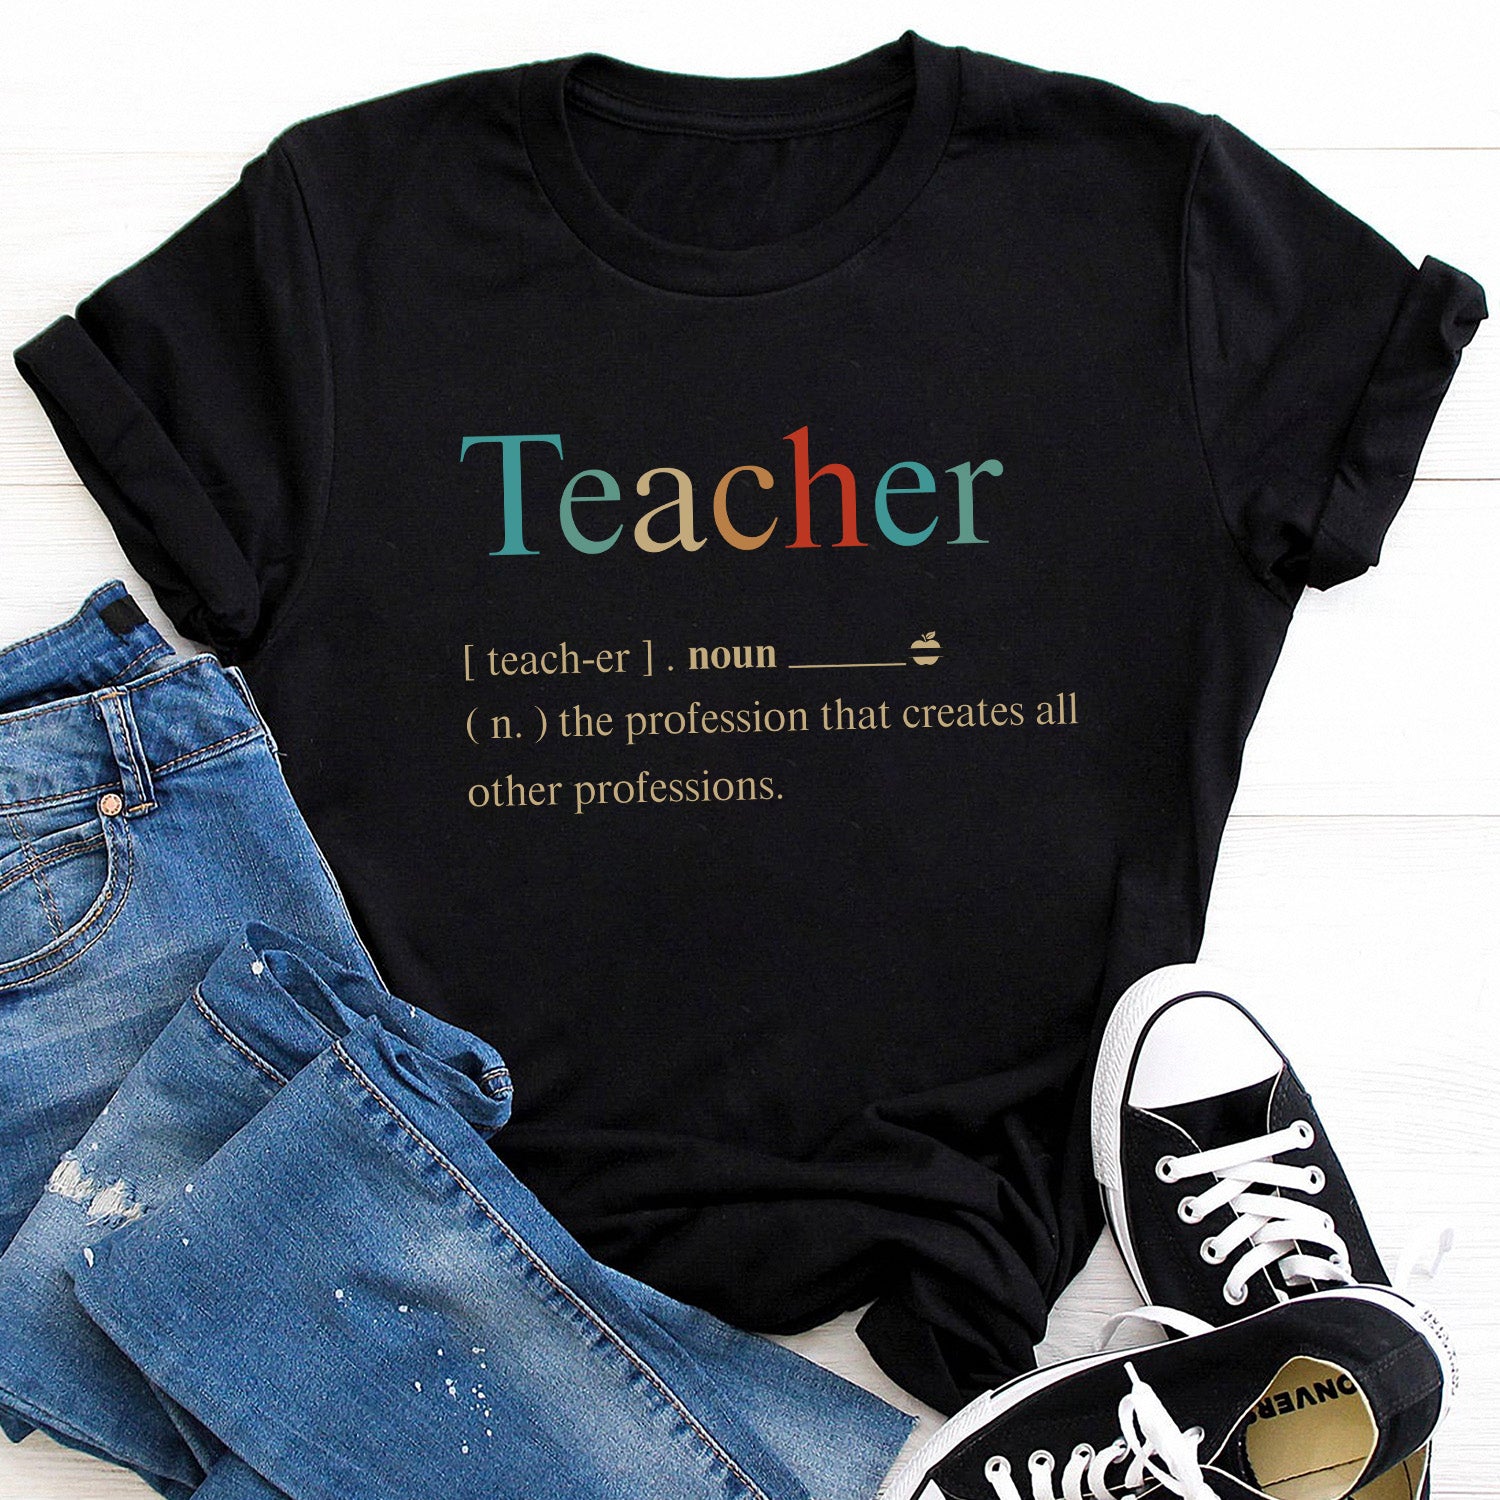 Teacher Dictionary Definition Profession Creates Other Meme - Standard T-Shirt